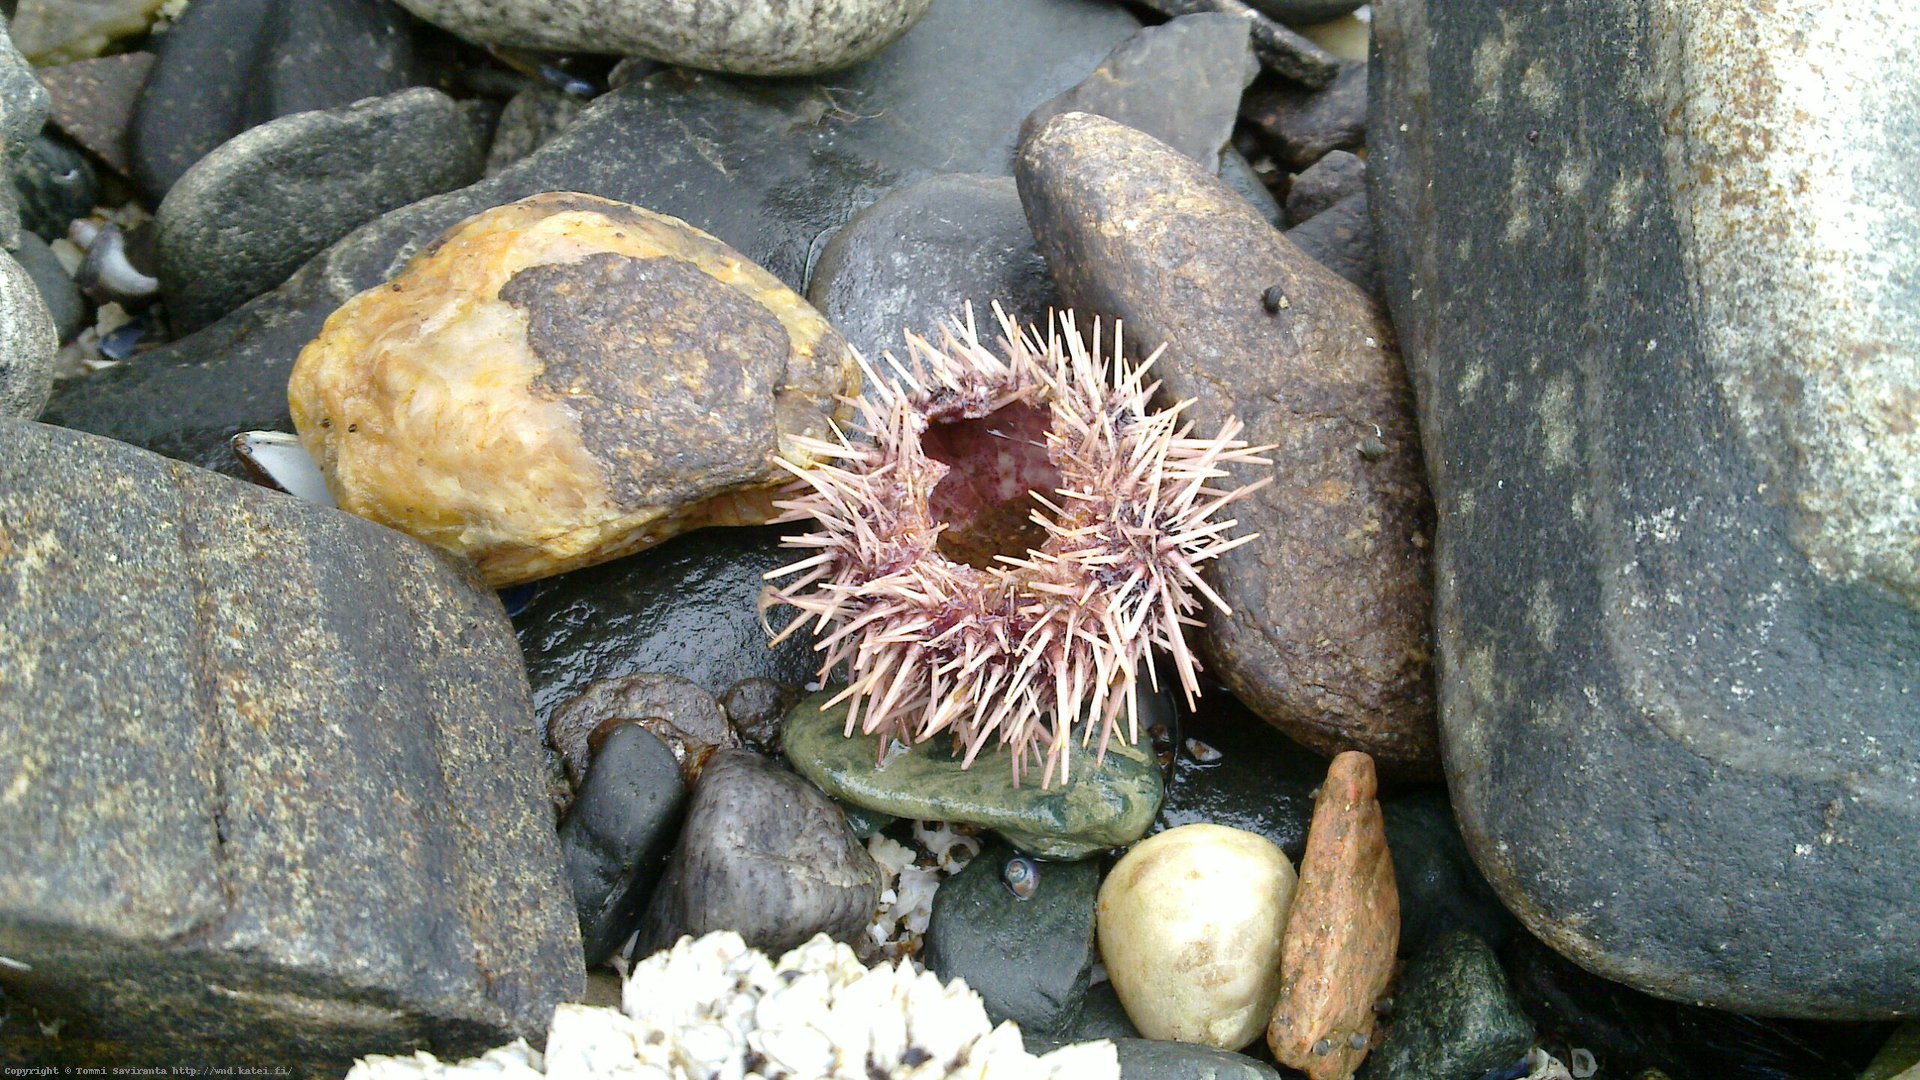 Sea urchin(?) south of Hammerfest